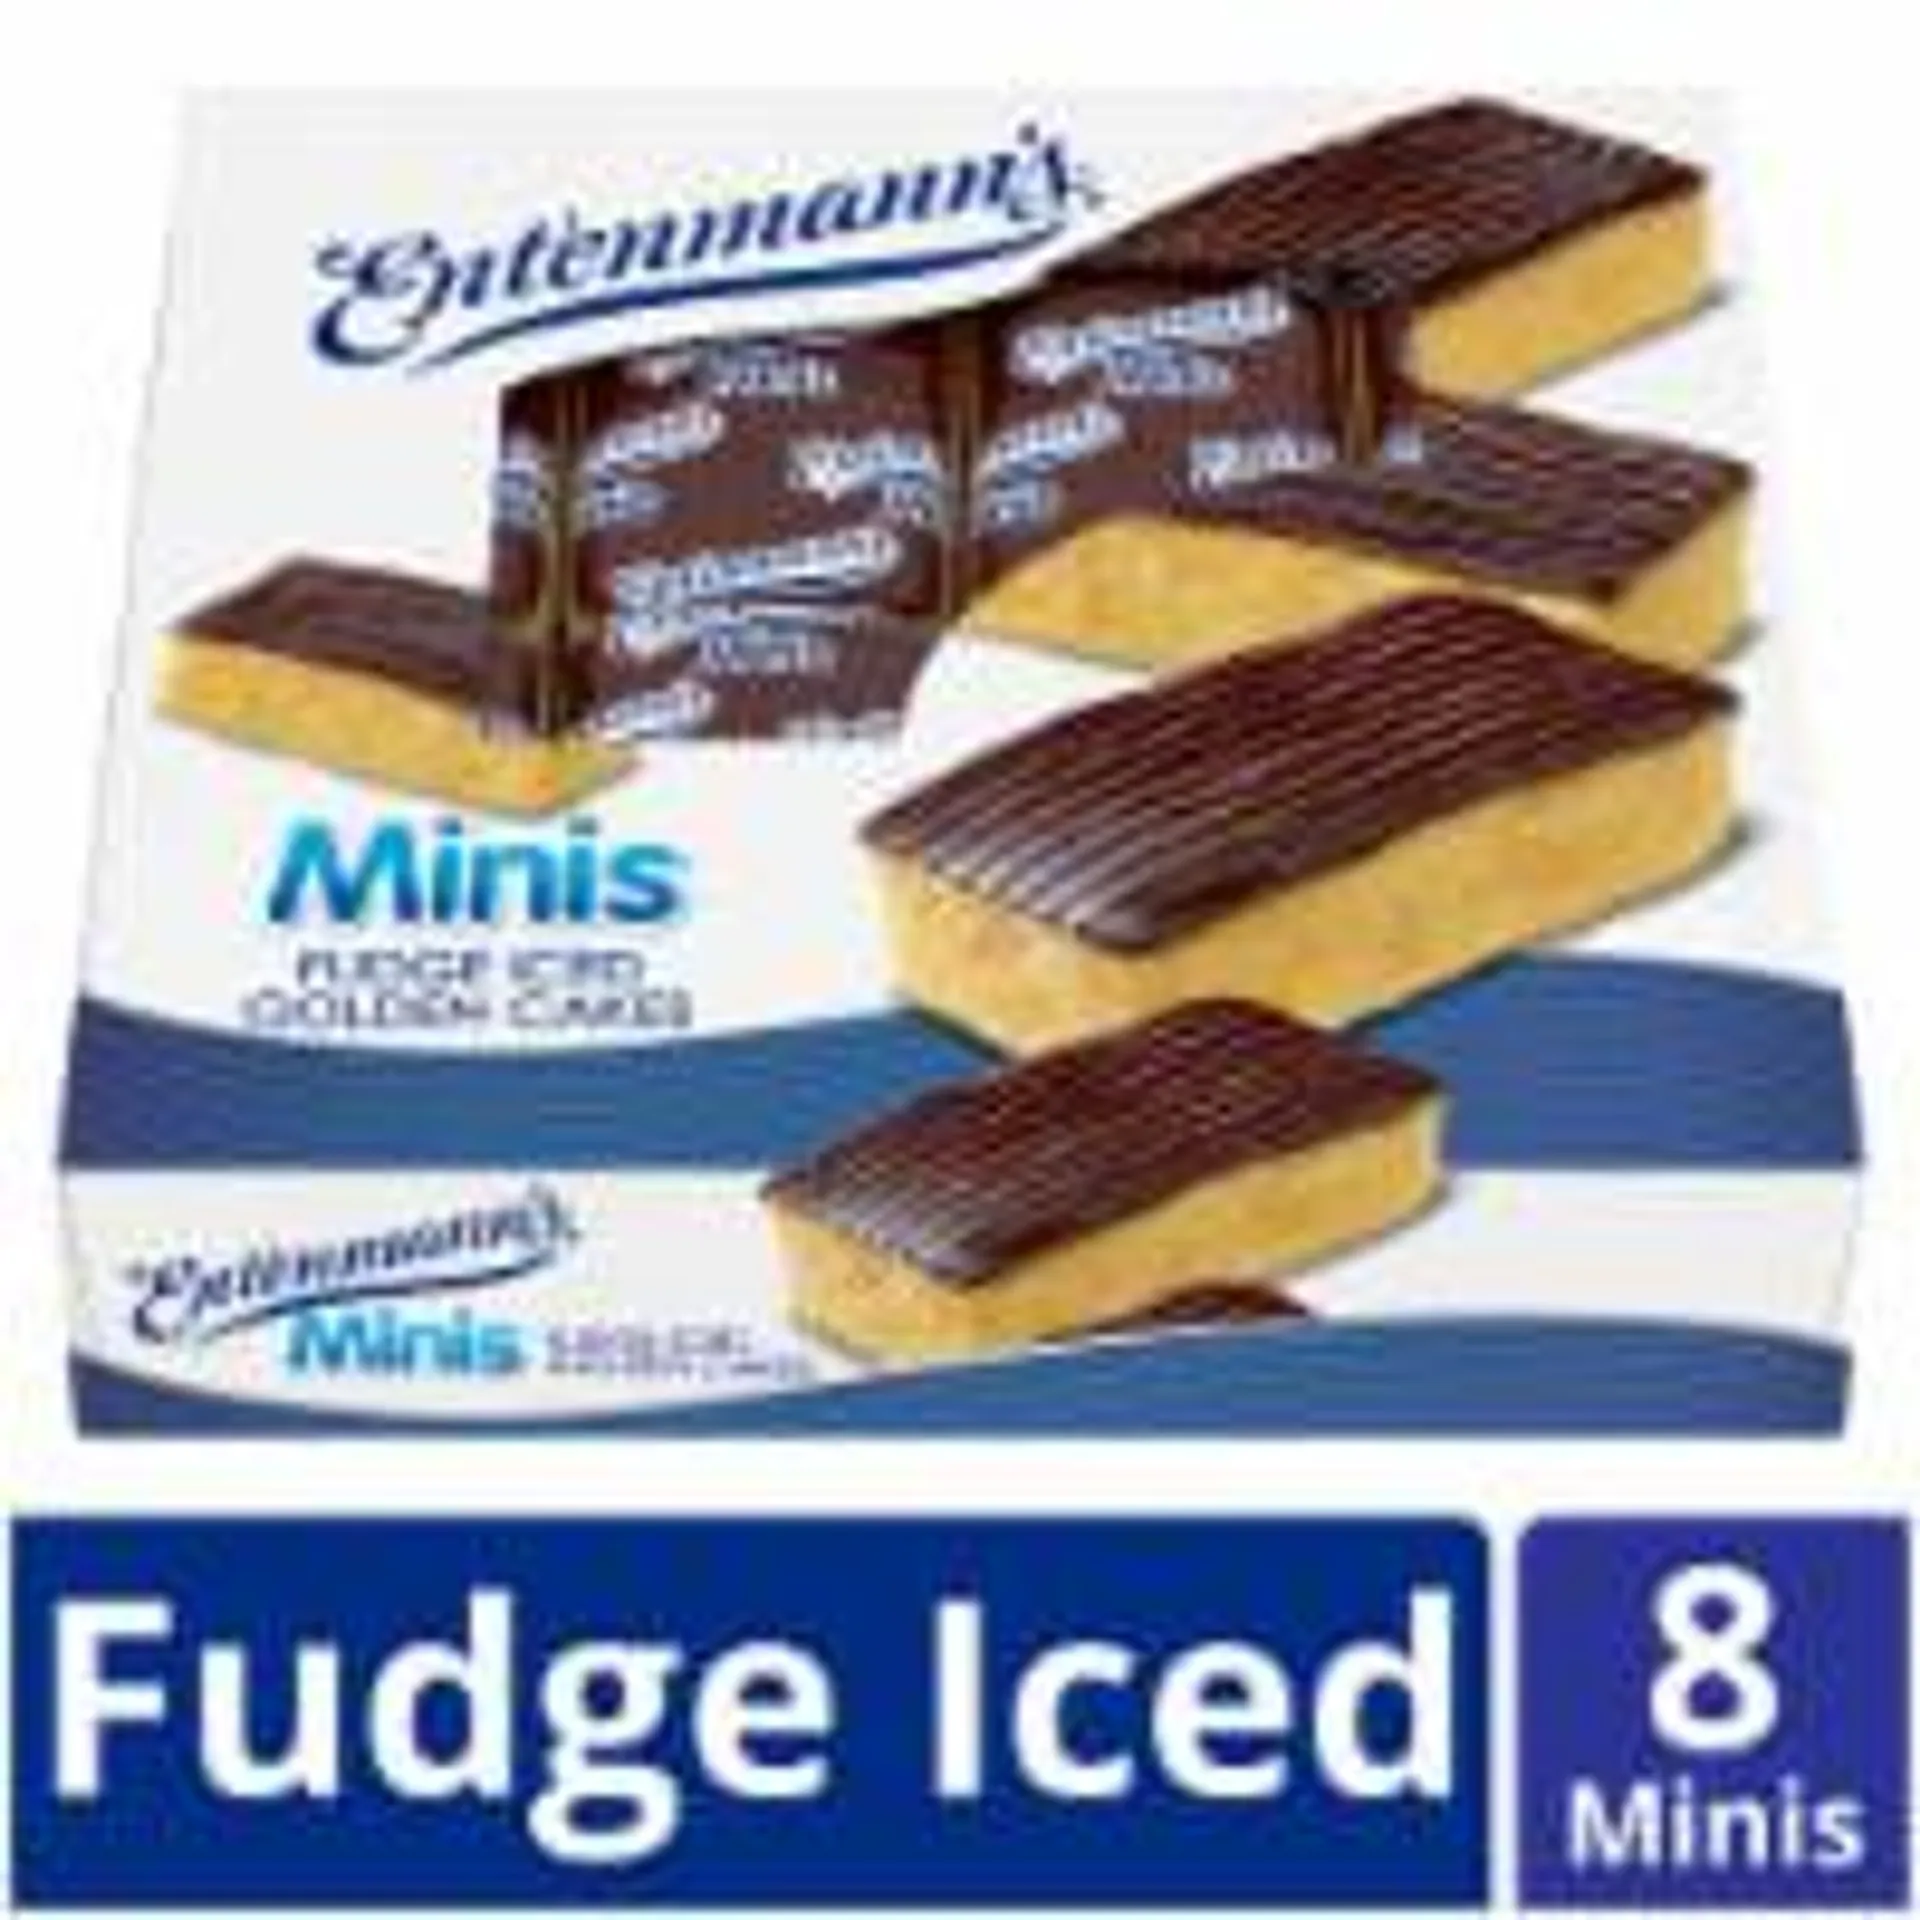 Entenmann's® Minis Fudge Iced Golden Cakes